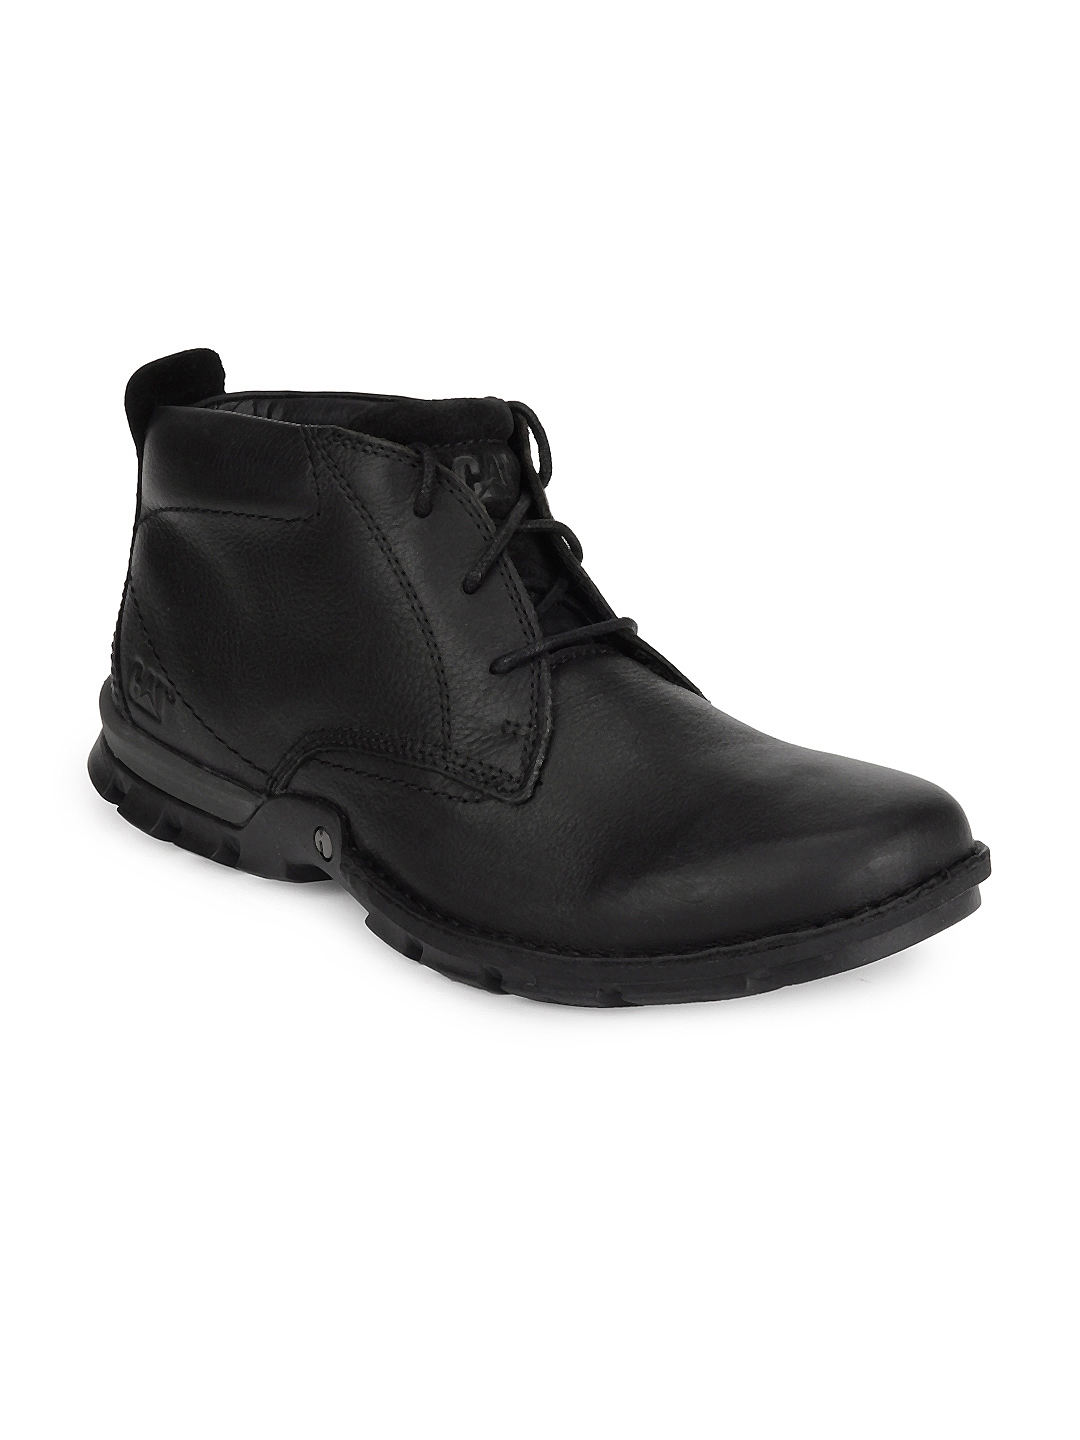 Buy Cat Men Black Blaxland Mid Casual Shoes - Casual Shoes for Men ...